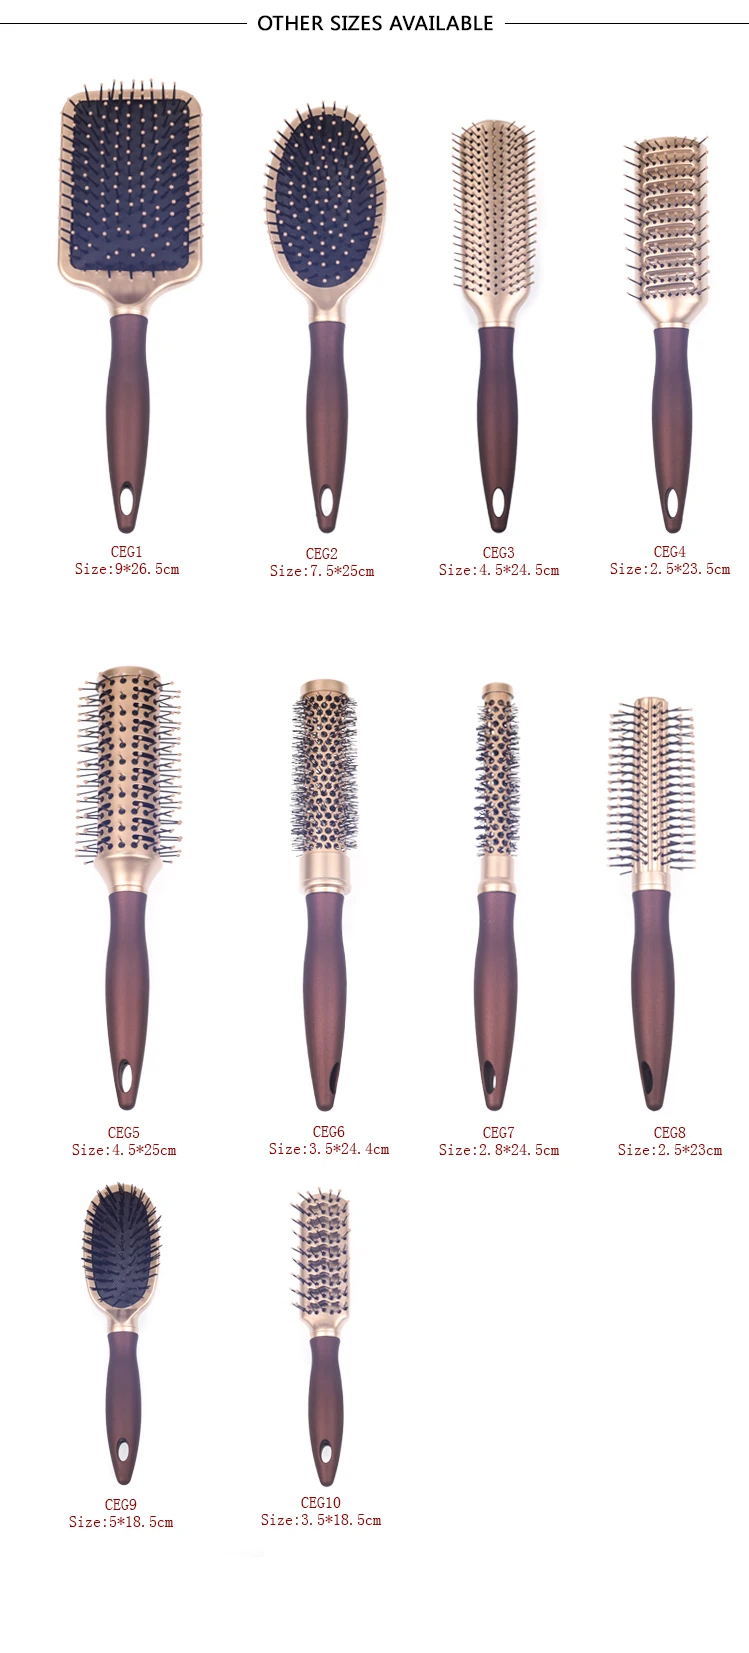 Eureka 9511ceg Br Styling Round Hair Brush For All Hair Types Ball Tip